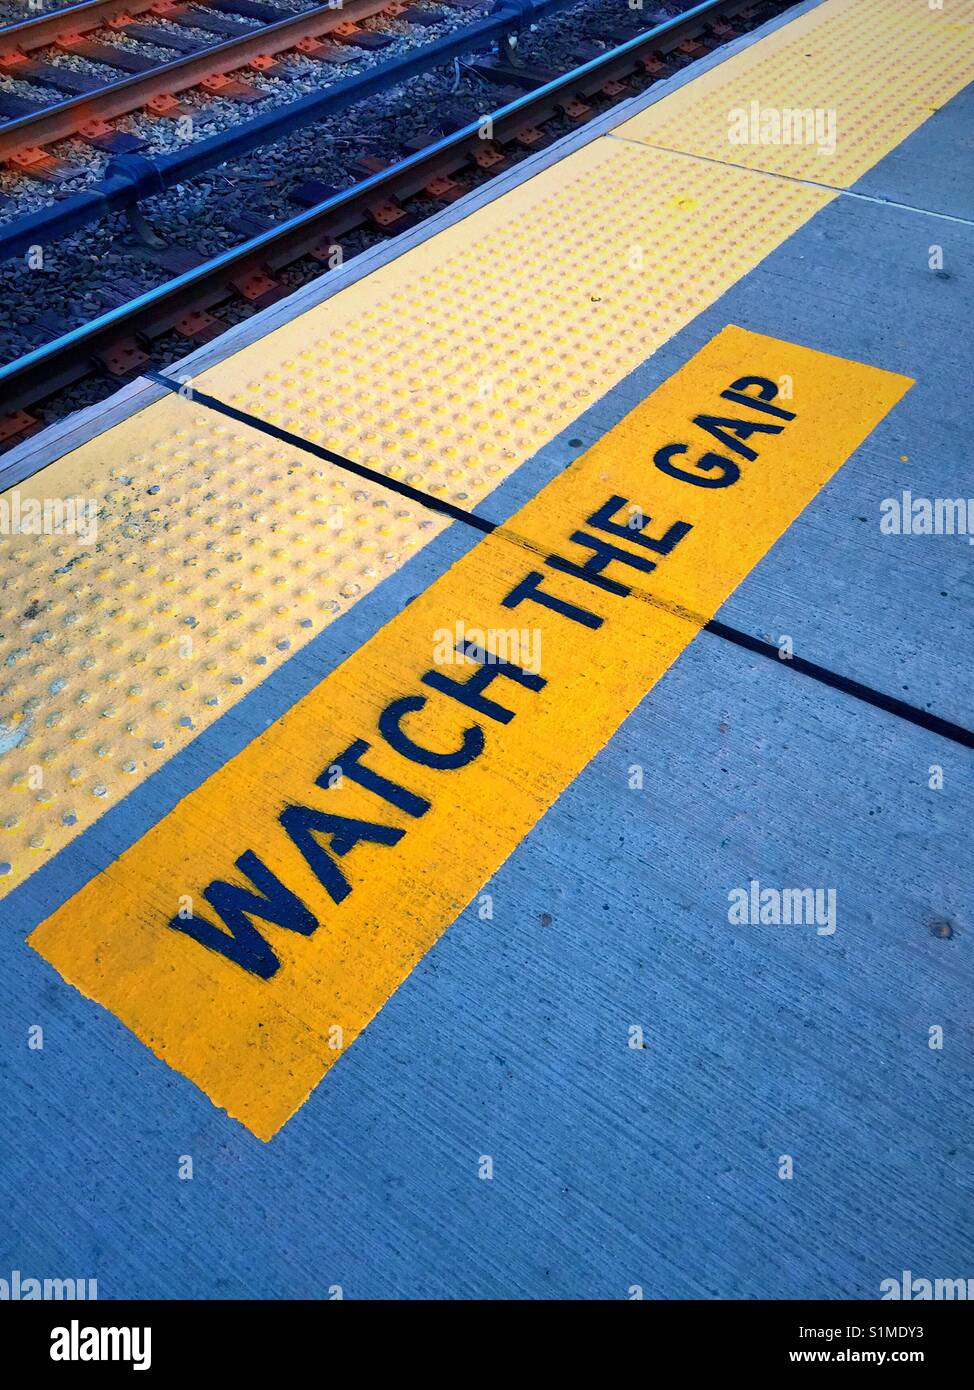 Train platform warning to watch the gap between the subway train and platform, USA Stock Photo